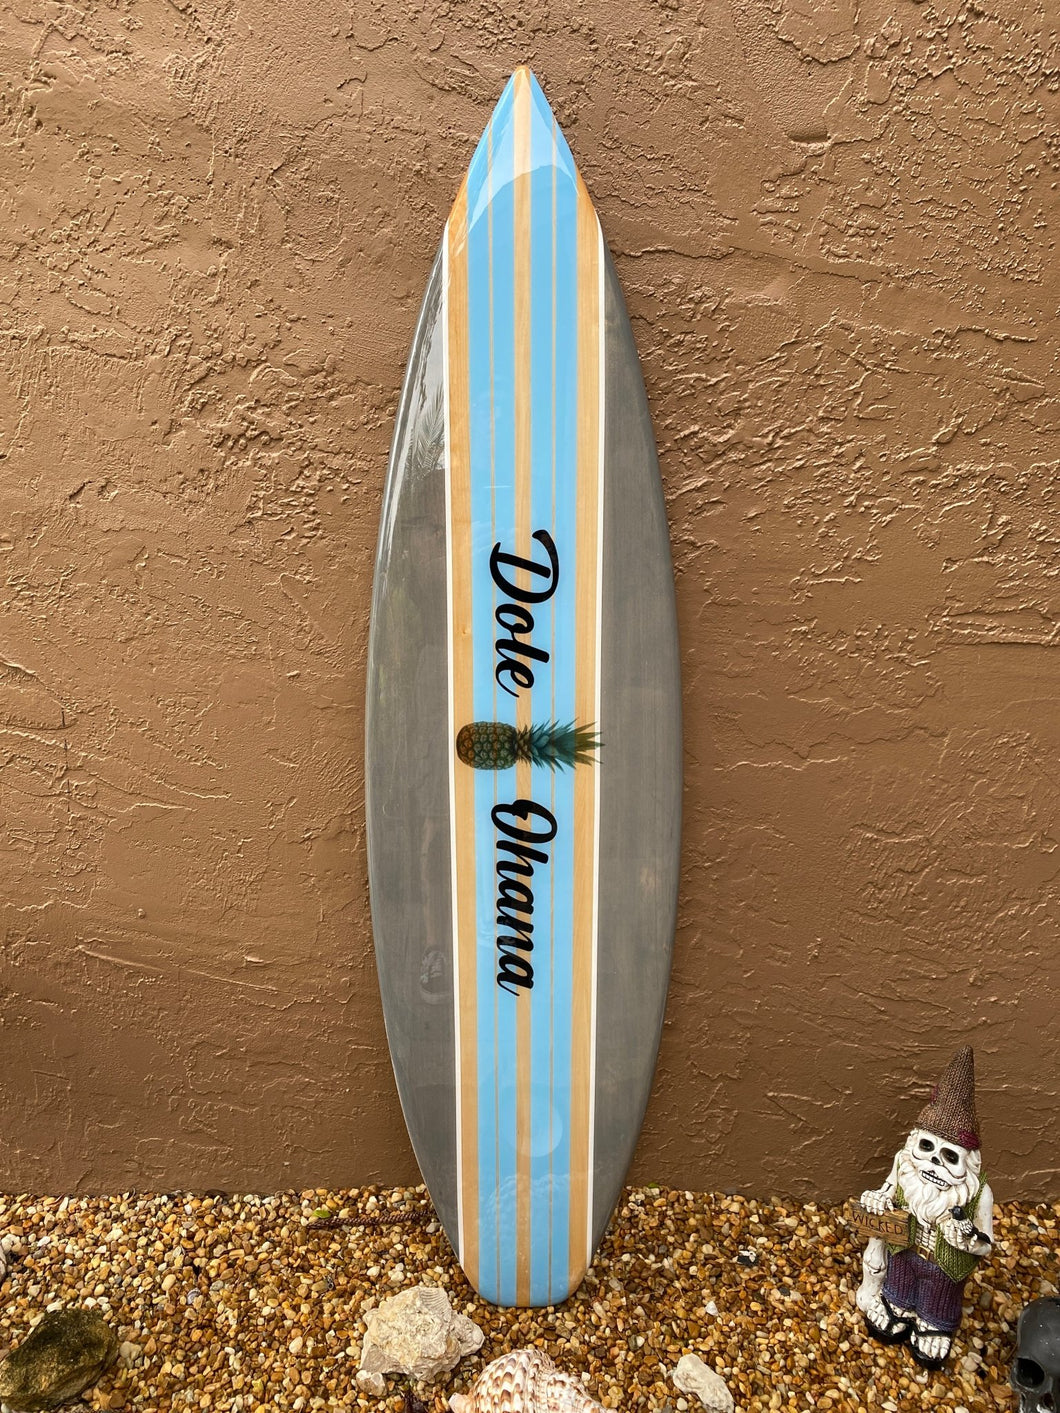 Ohana Always - Coastal Decor Personalized Surfboard Sign - Tiki Soul Coastal Surfboard Decor